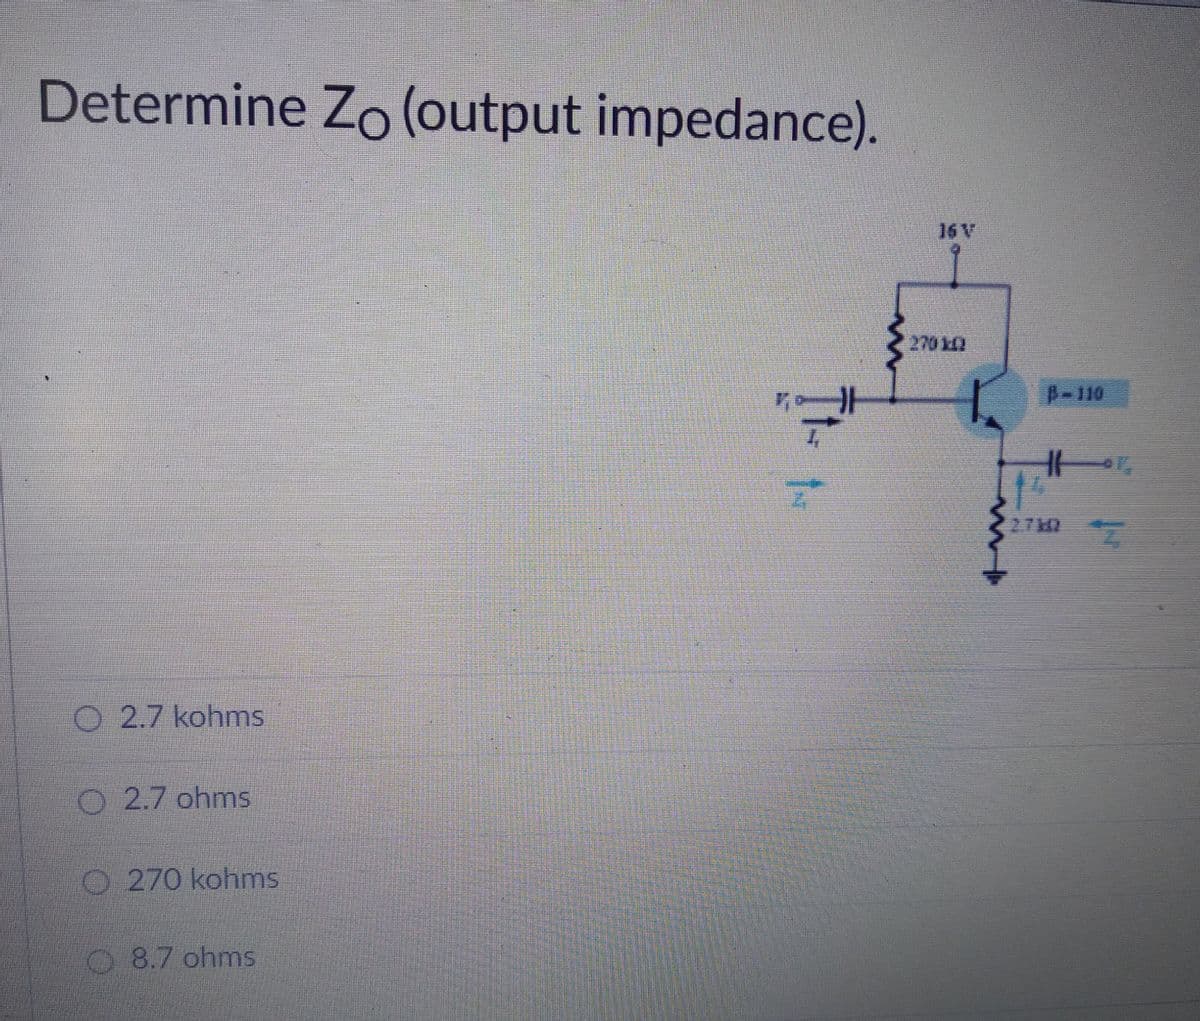 Determine Zo (output impedance).
16 V
2702
-110
2.7M2
O 2.7 kohms
O 2.7 ohms
O 270 kohms
08.7 ohms
